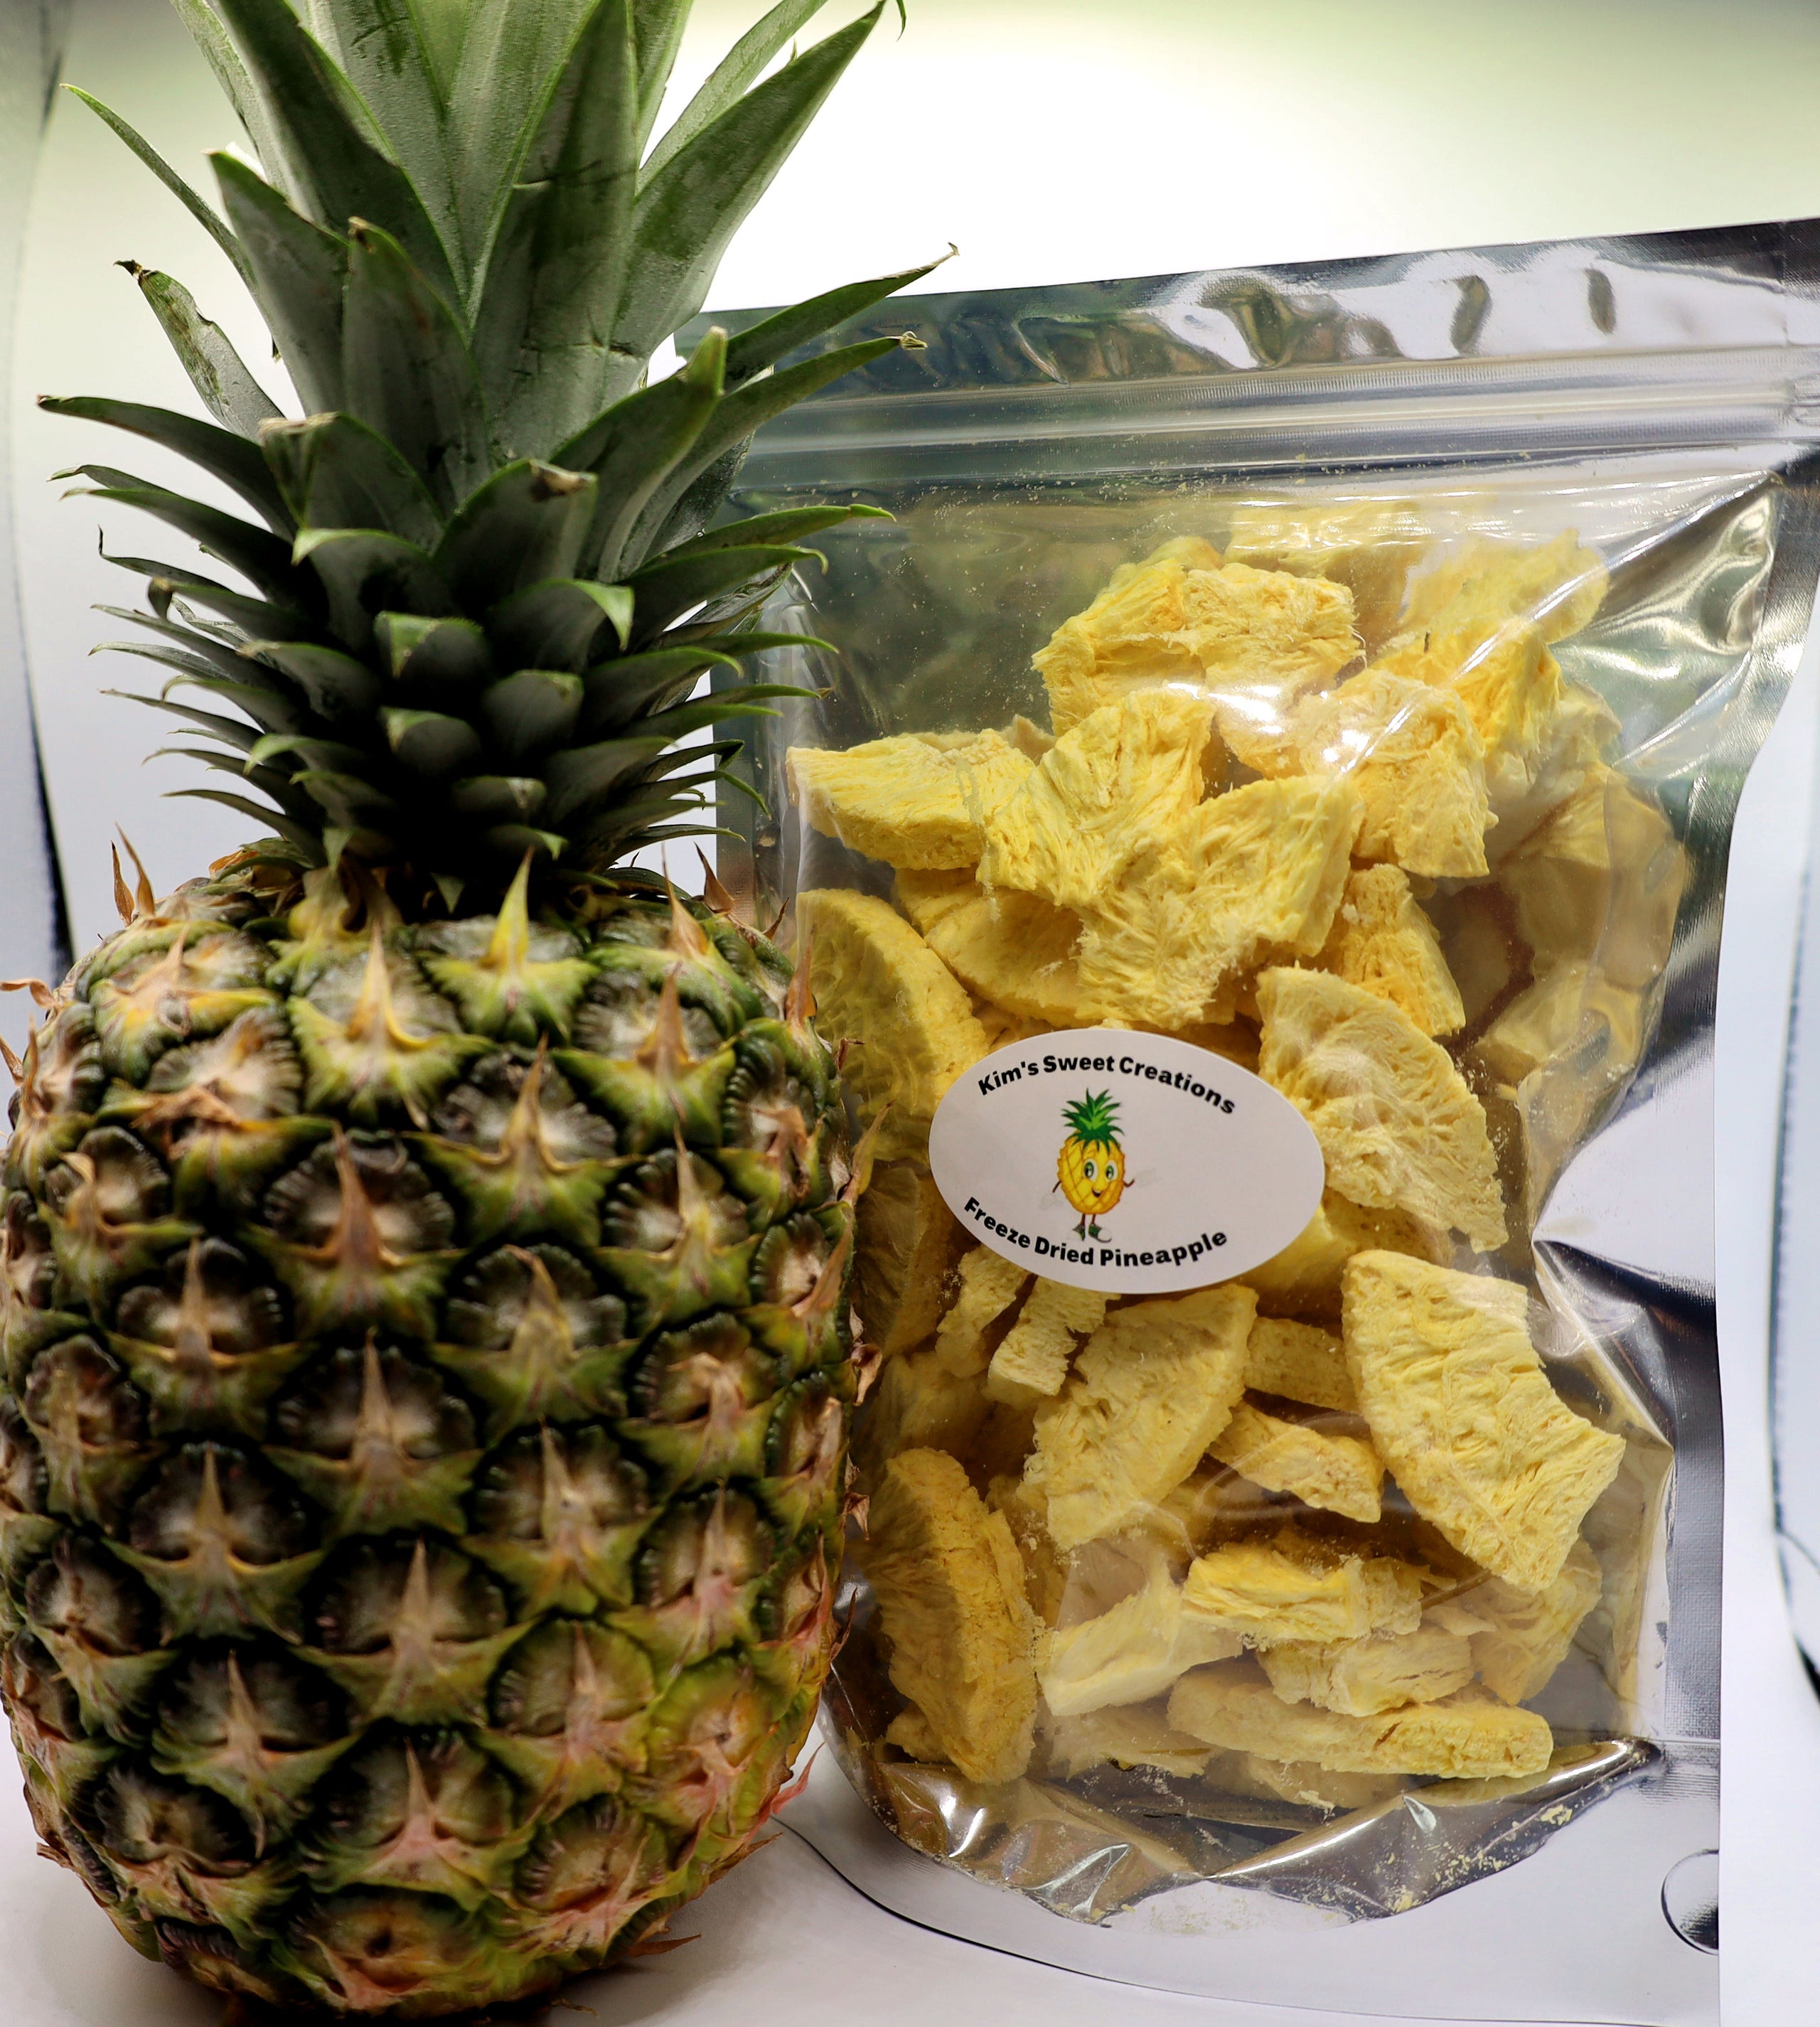 Freeze-Dried Pineapple